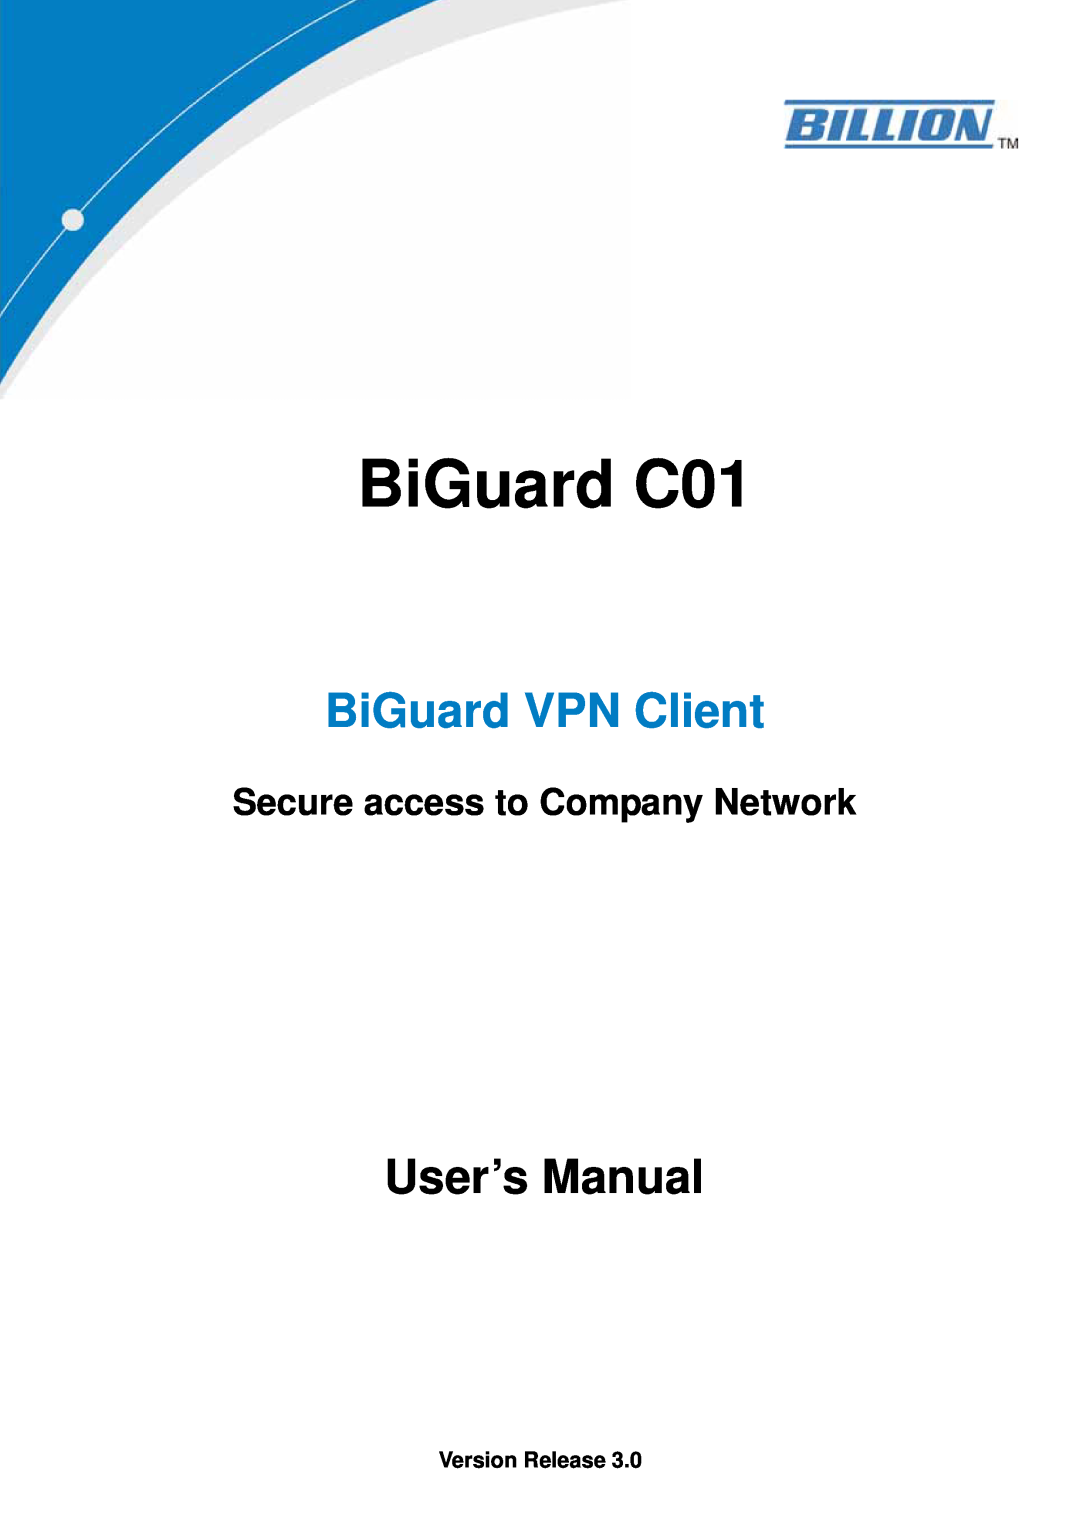 Billion Electric Company CO1 user manual Version Release, BiGuard C01, BiGuard VPN Client, User’s Manual 